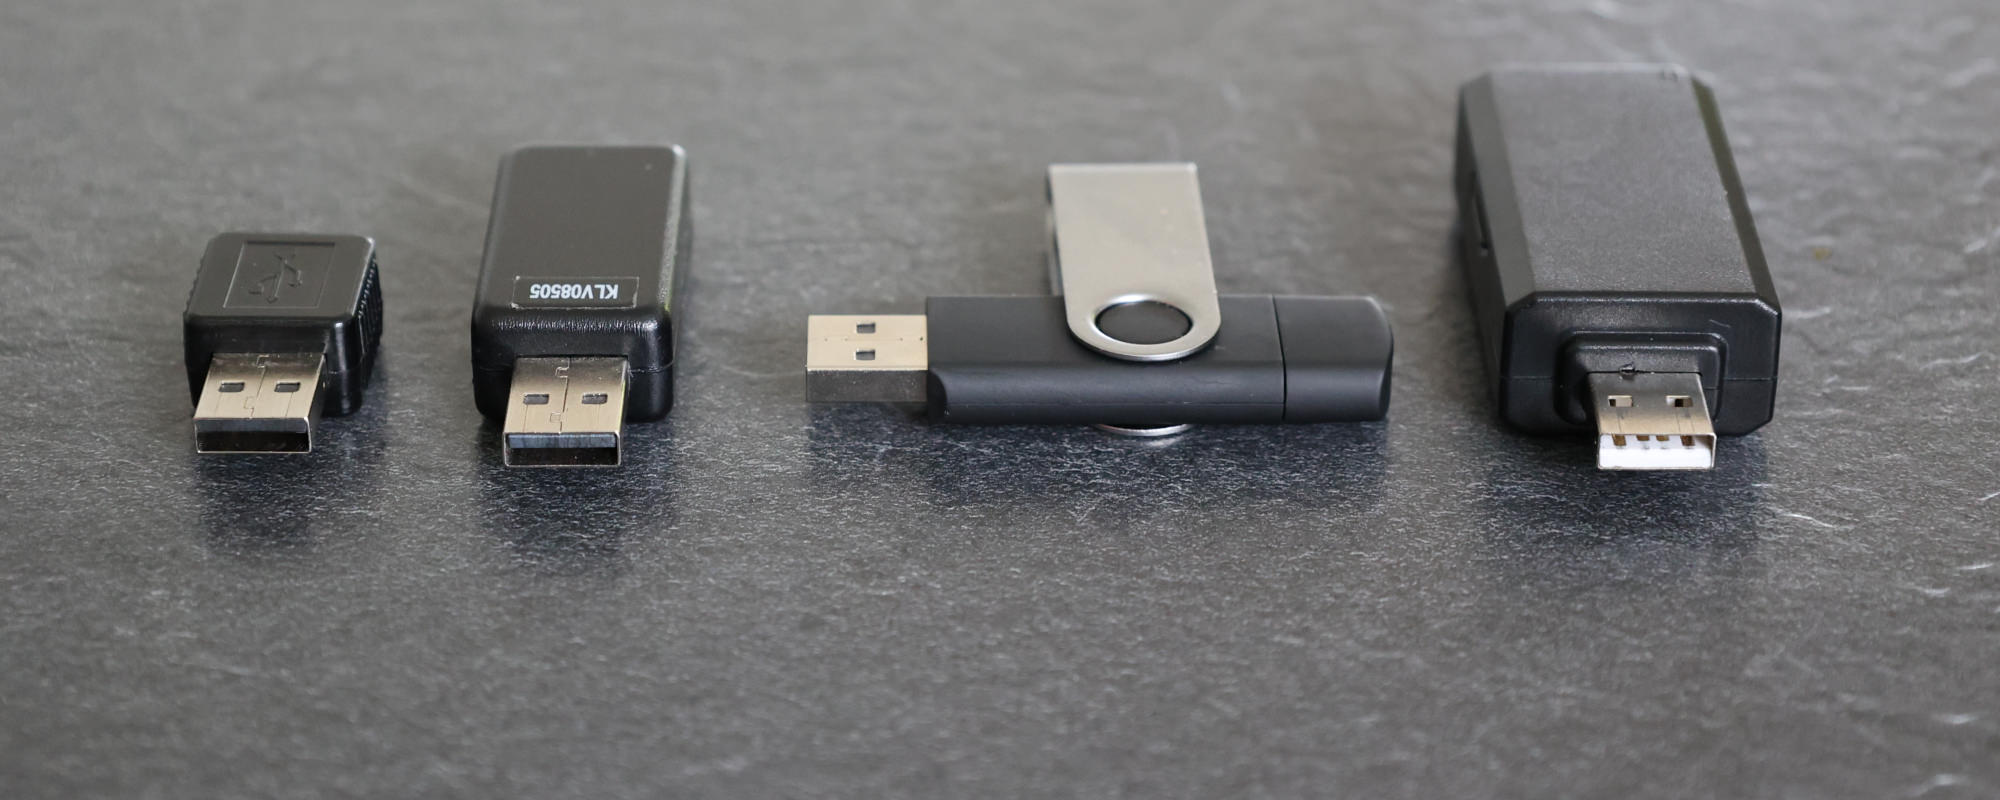 USB-Keylogger und BadUSB-Hardware